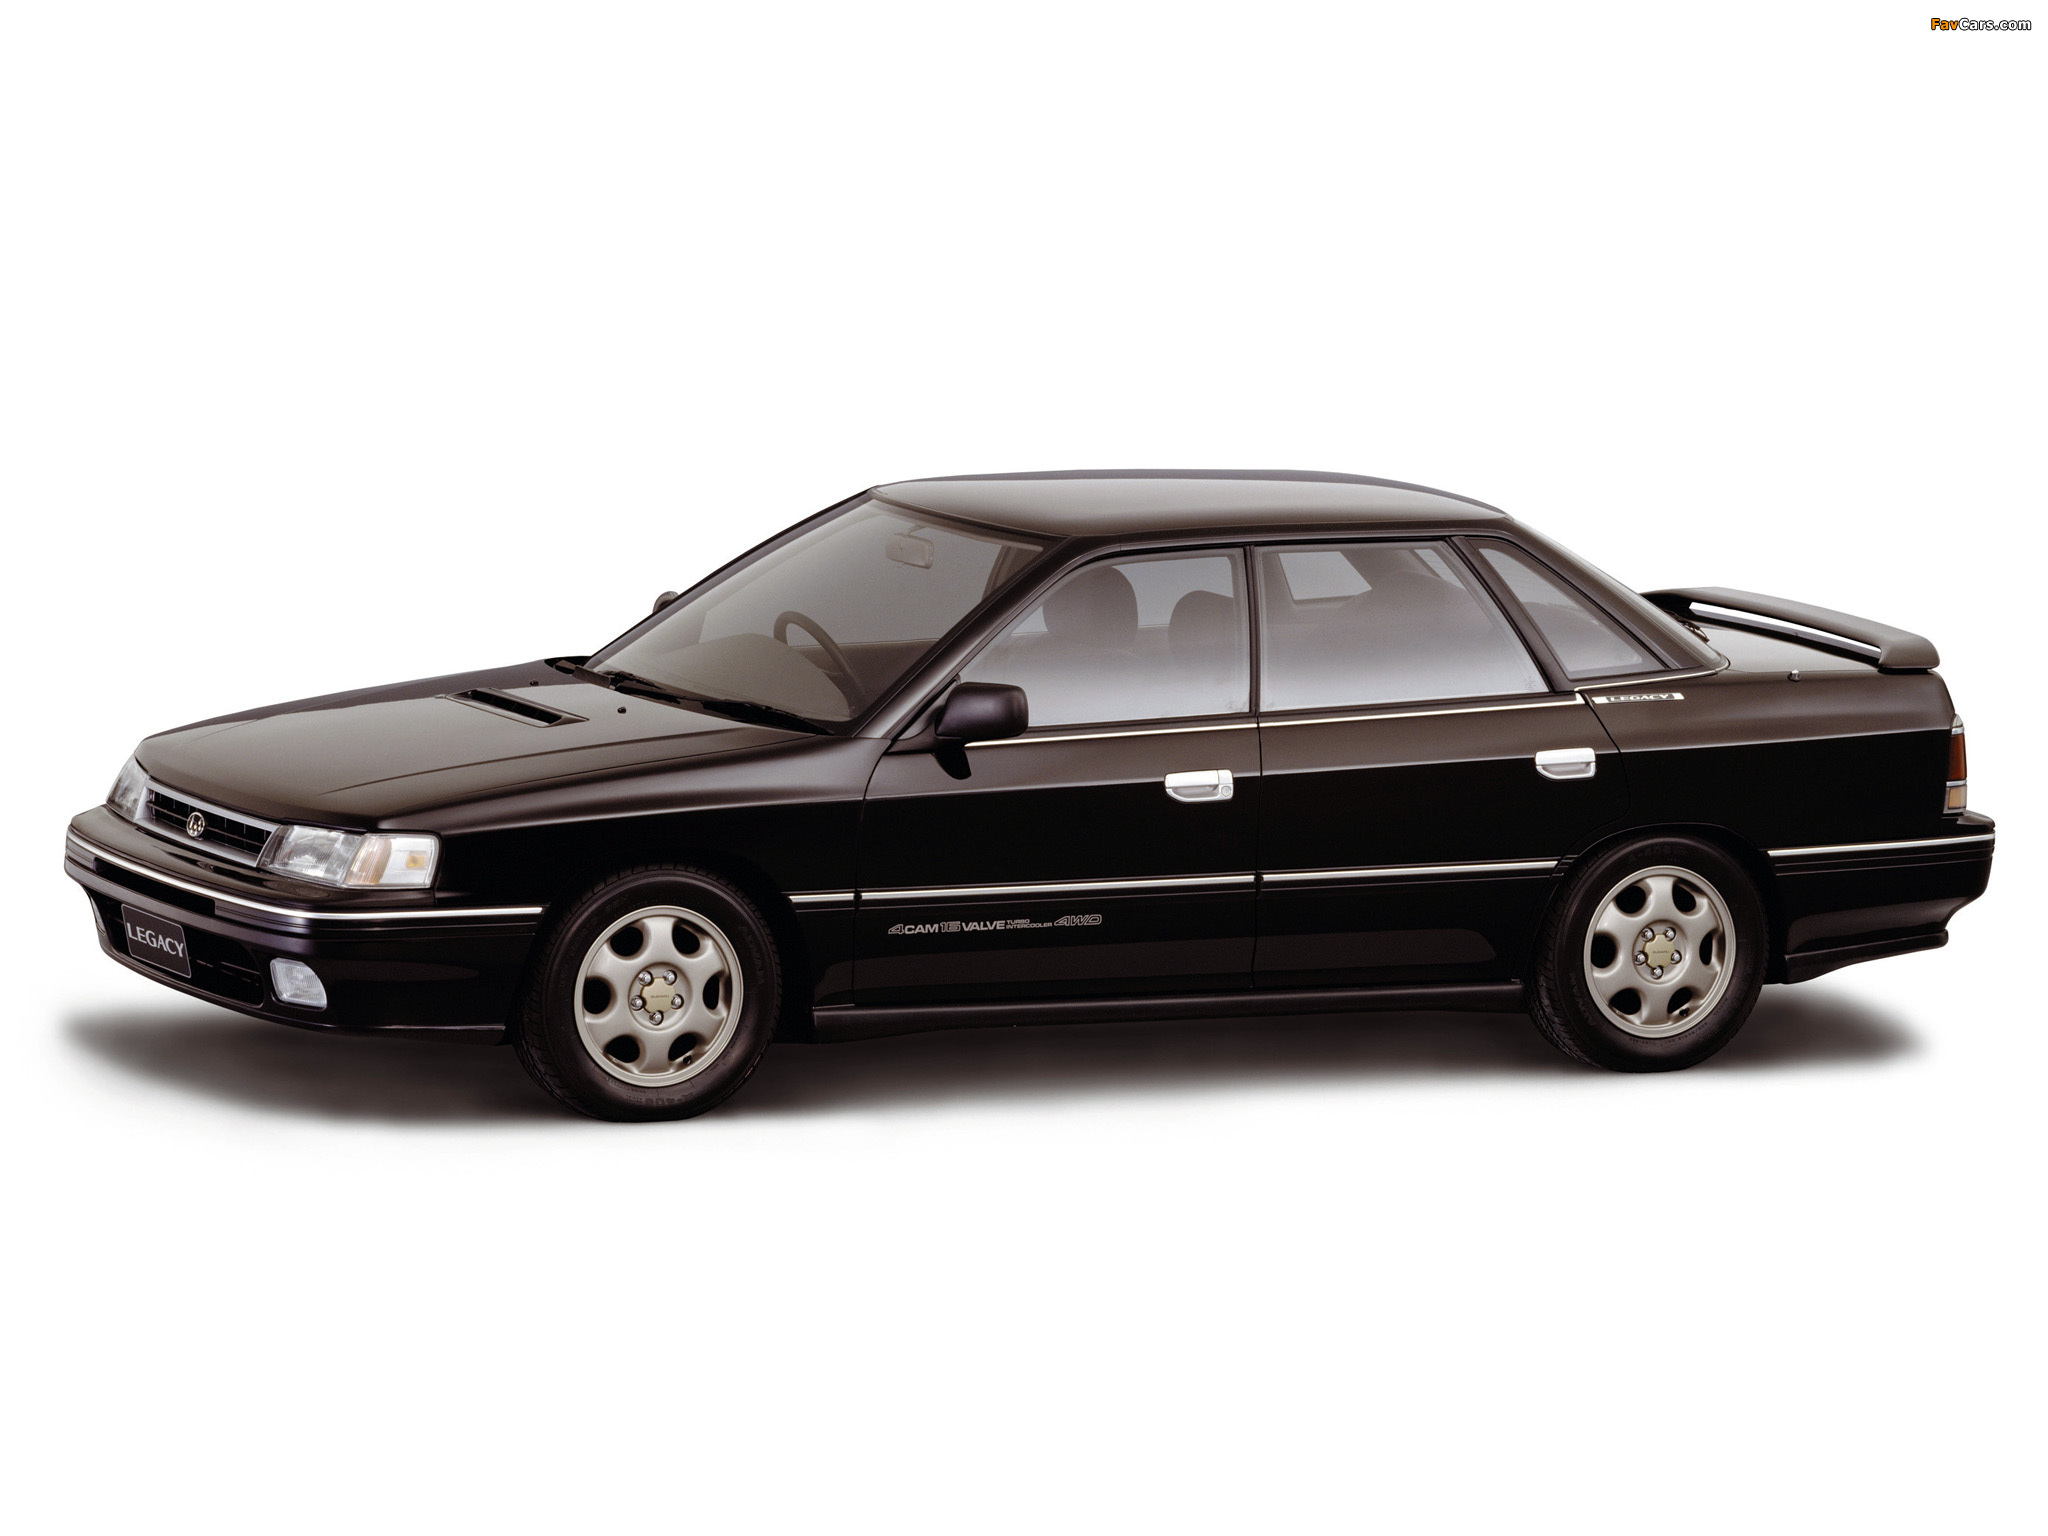 Subaru Legacy 2.0 RS (BC) 198993 photos (2048x1536)